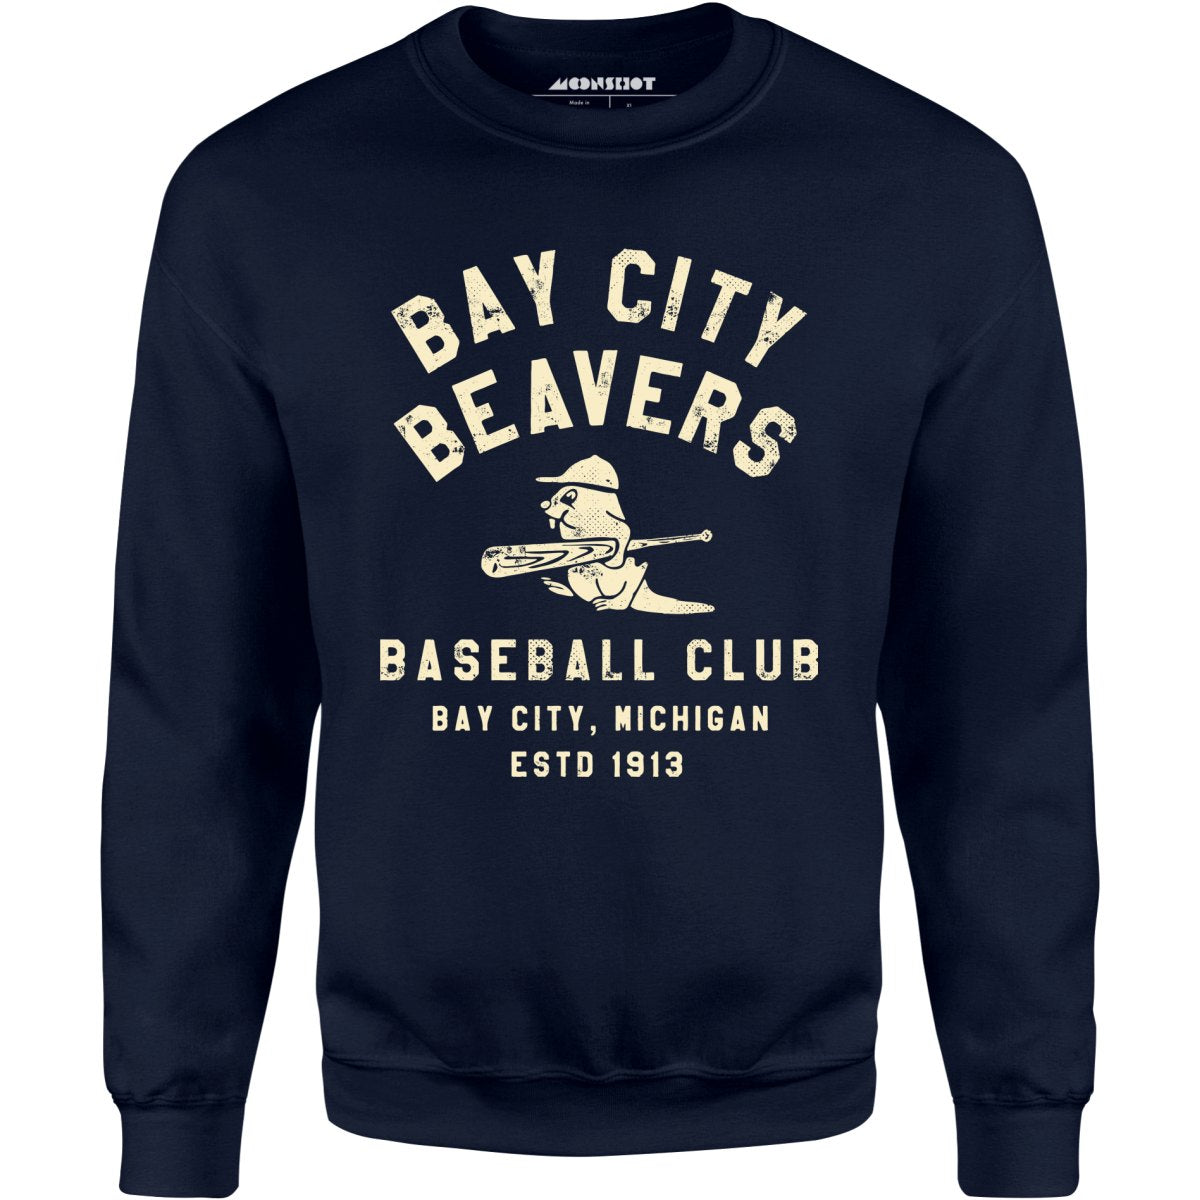 Bay City Beavers - Michigan - Vintage Defunct Baseball Teams - Unisex Sweatshirt